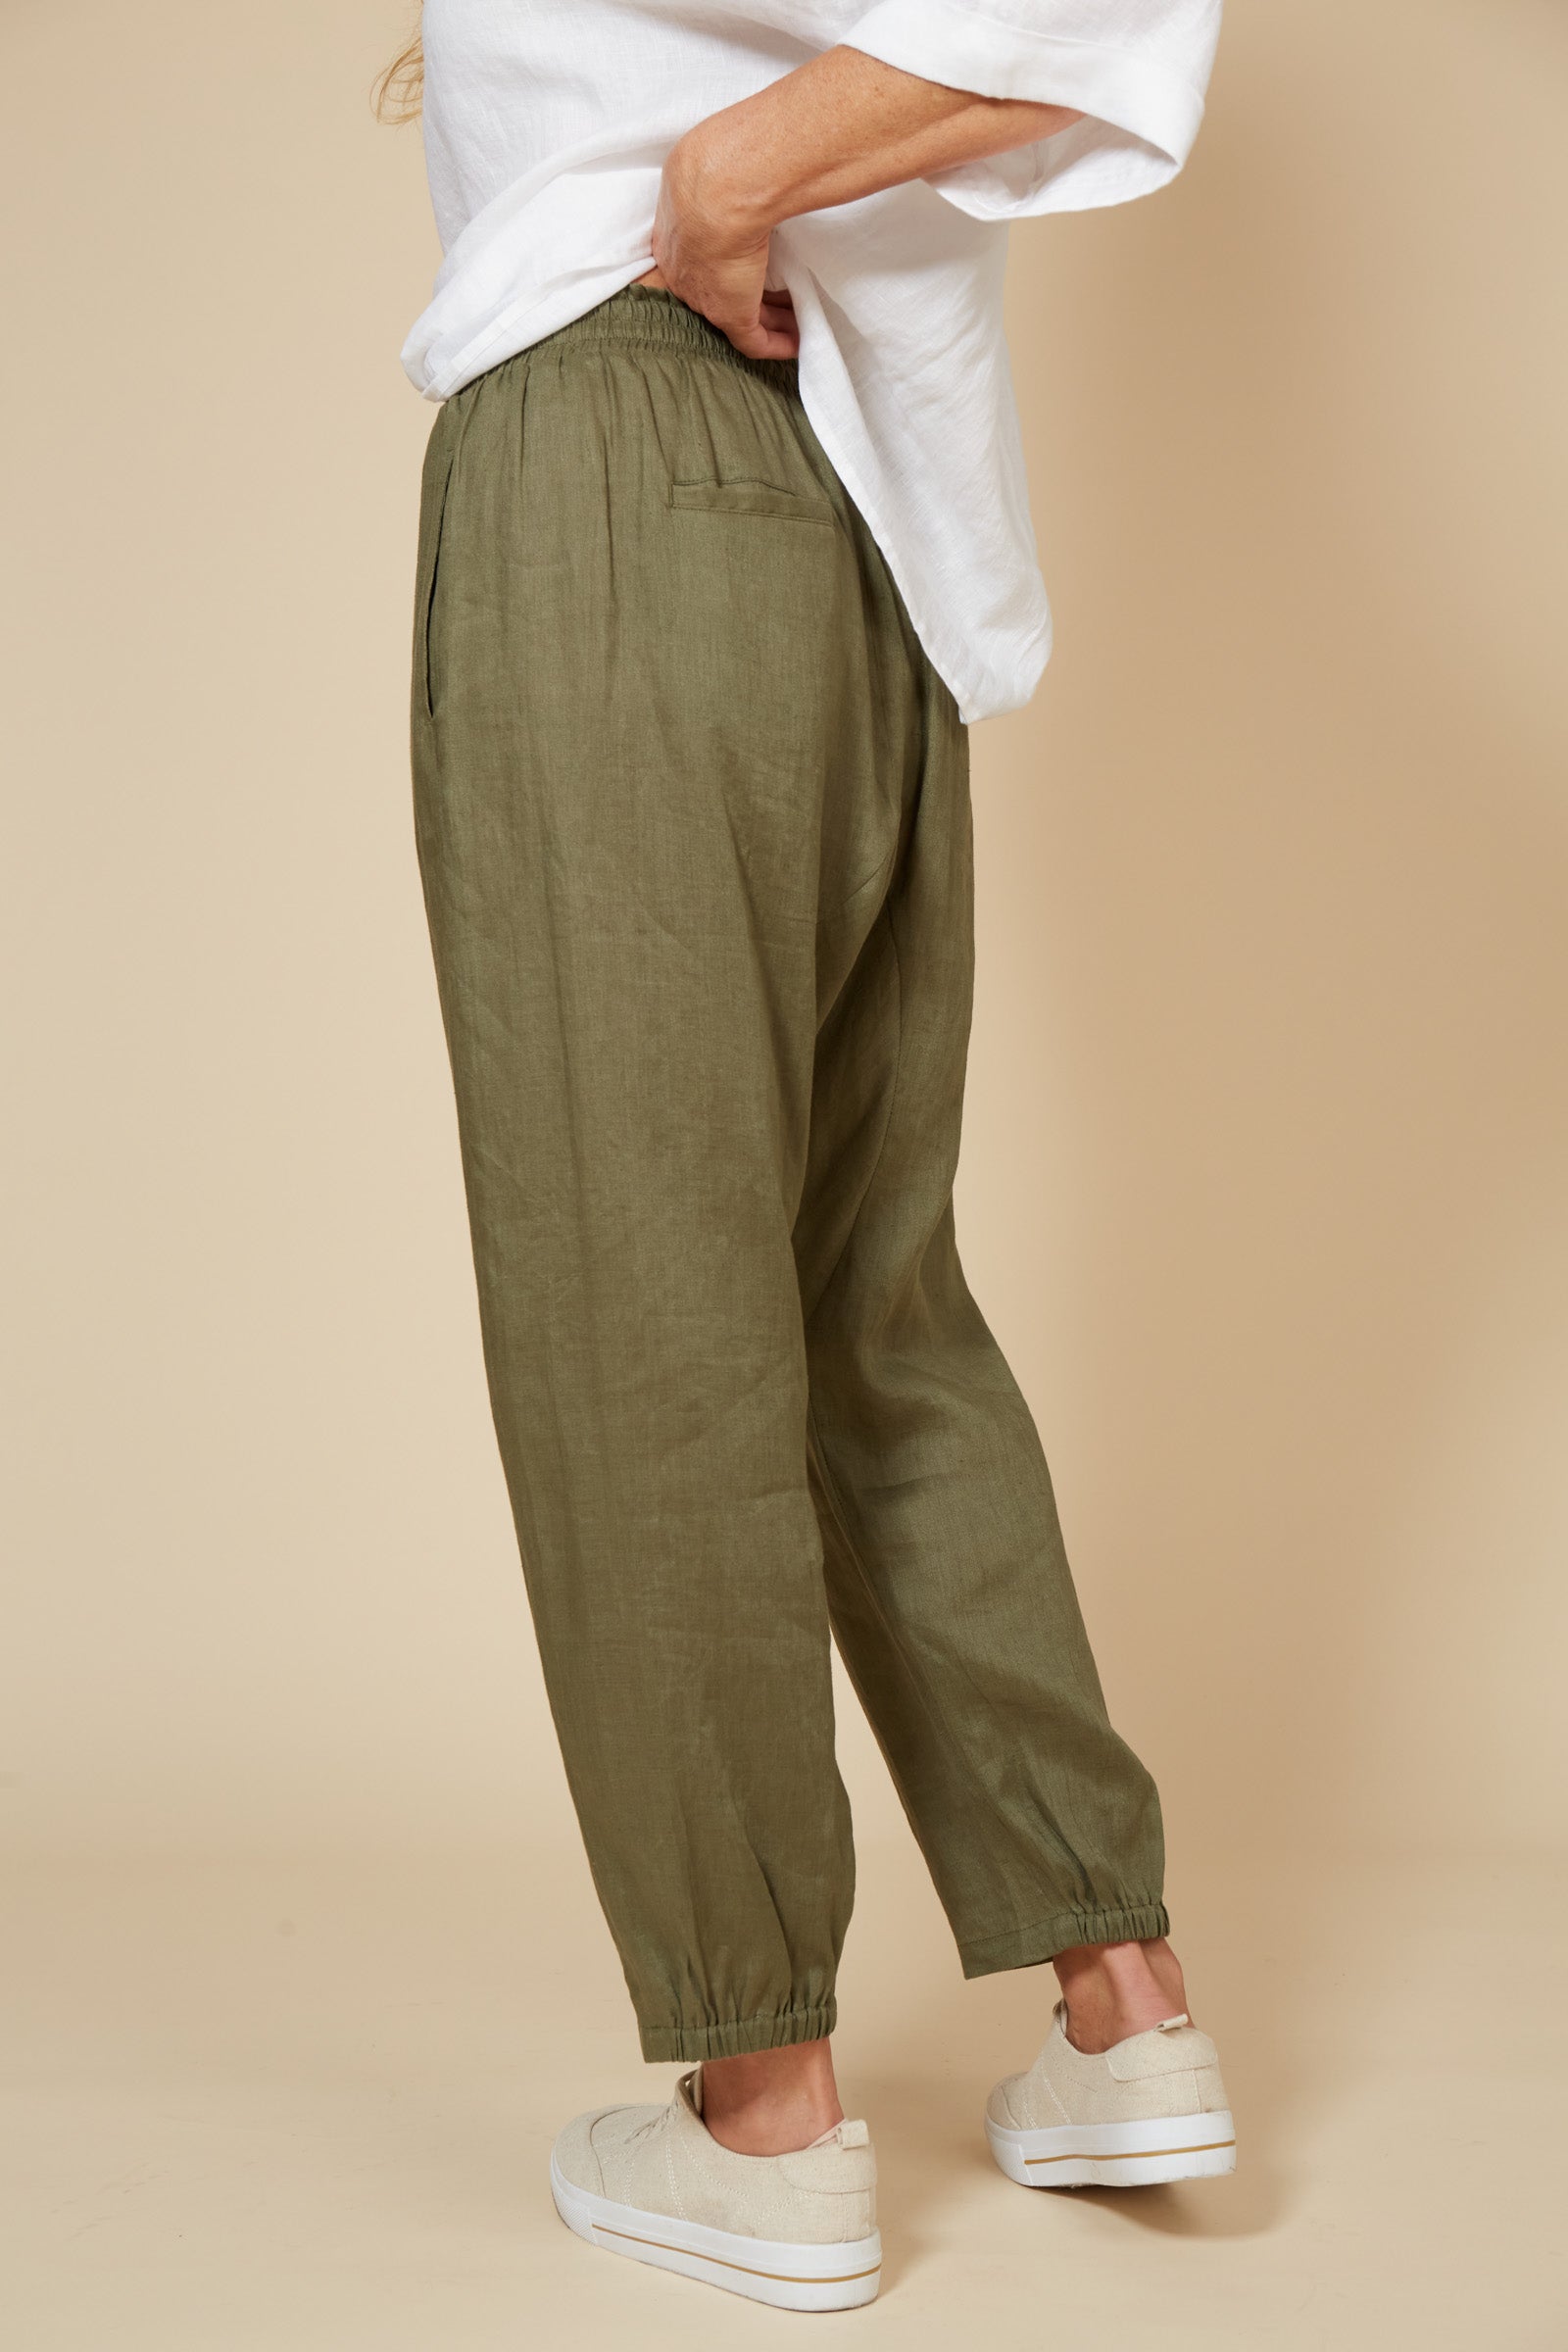 Studio Works Women's Light Beige Lightweight Elastic Waist Khaki Pants Size  16